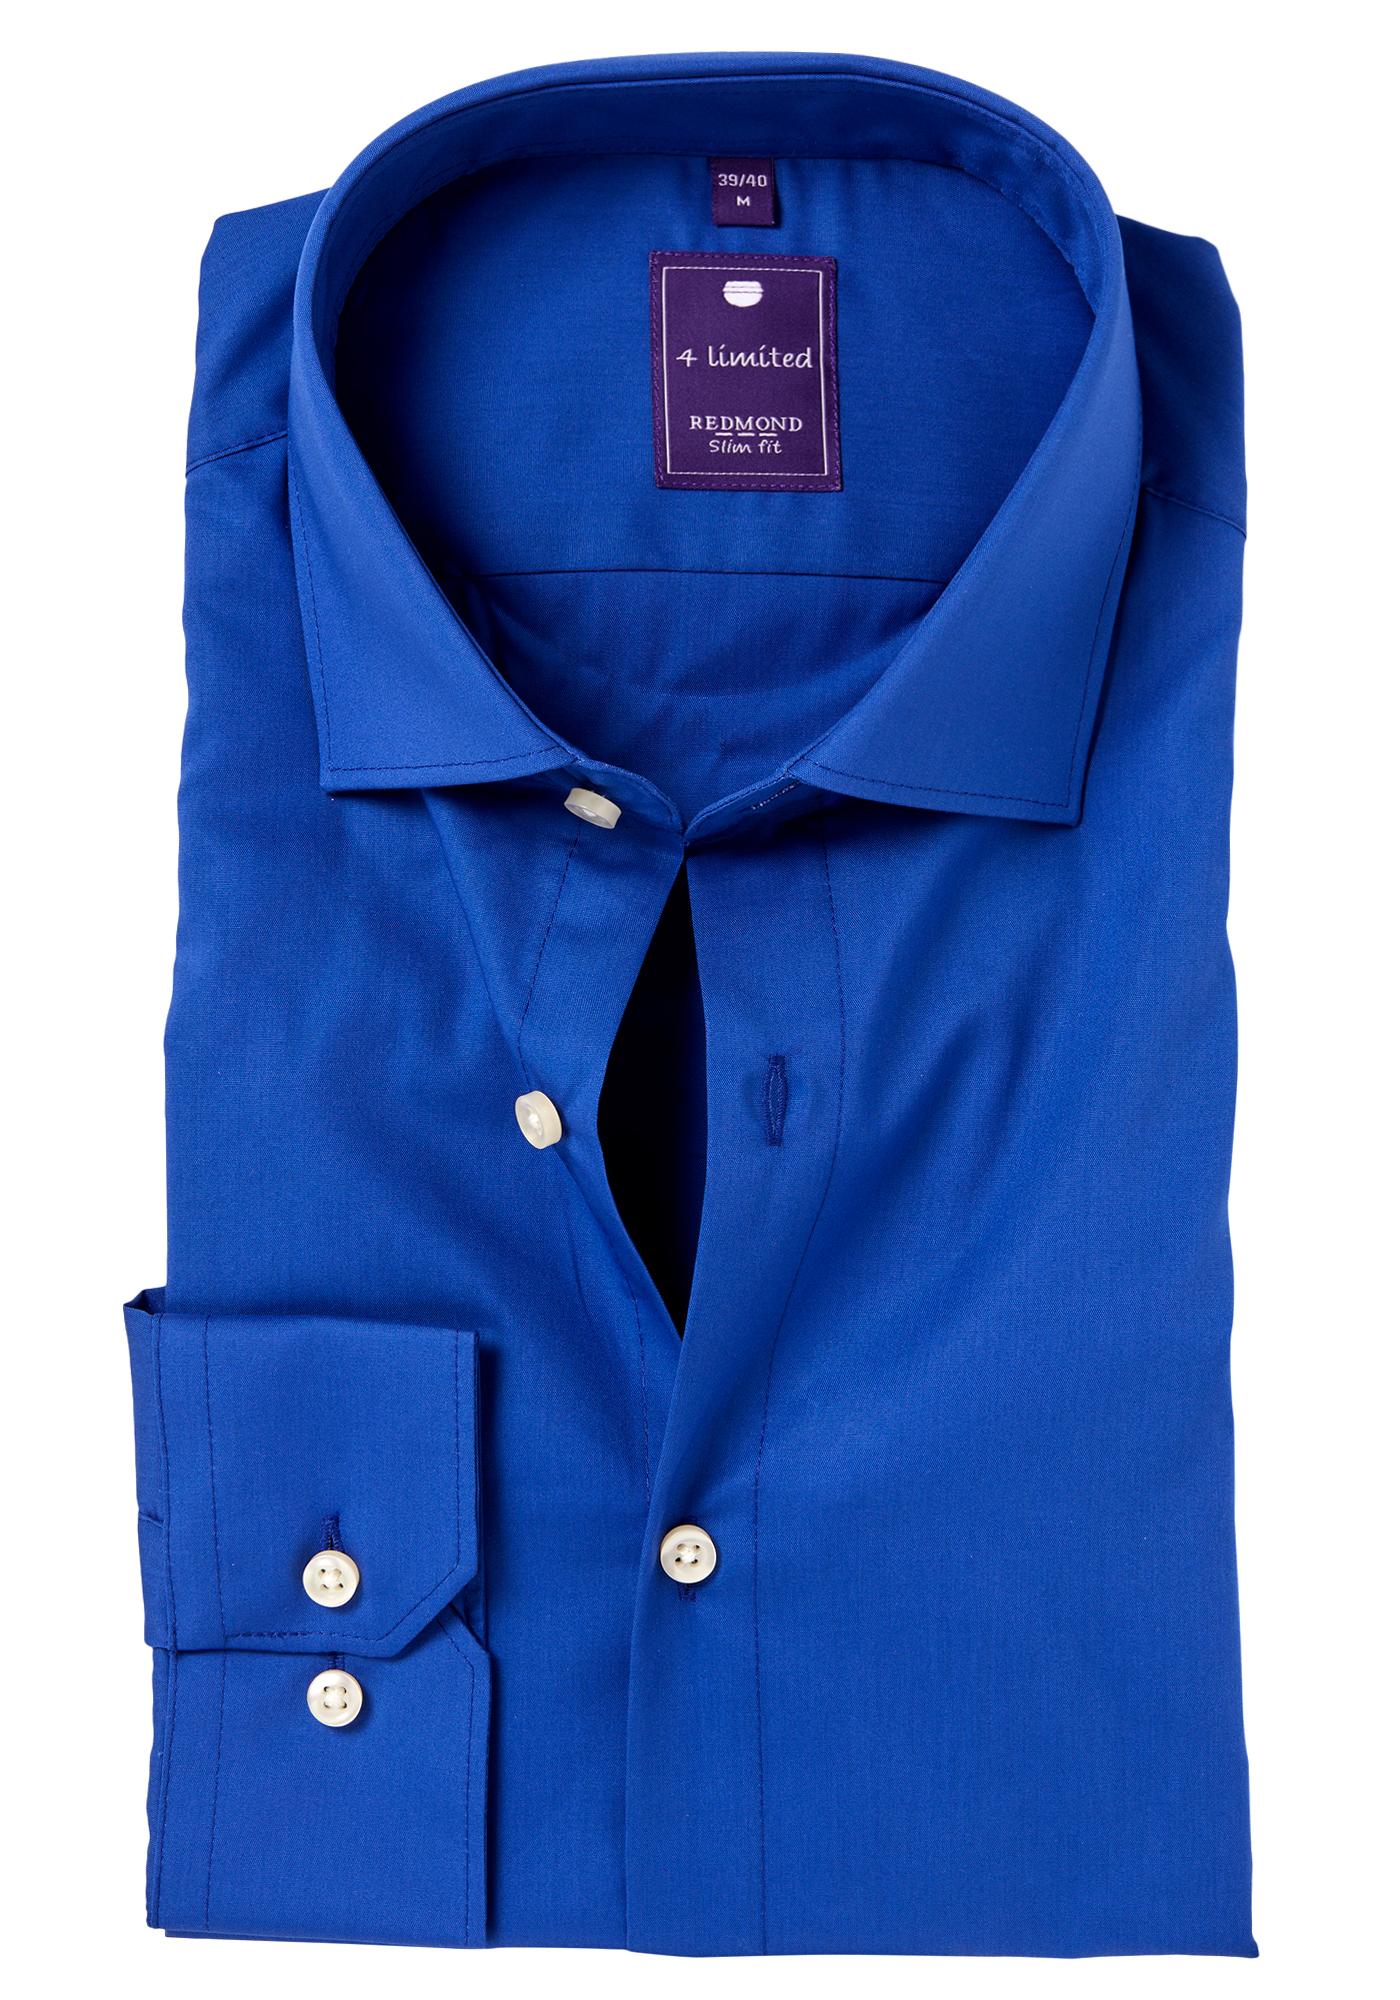 Vruchtbaar Zenuwinzinking spons Redmond slim fit overhemd, kobaltblauw - Zomer SALE tot 50% korting